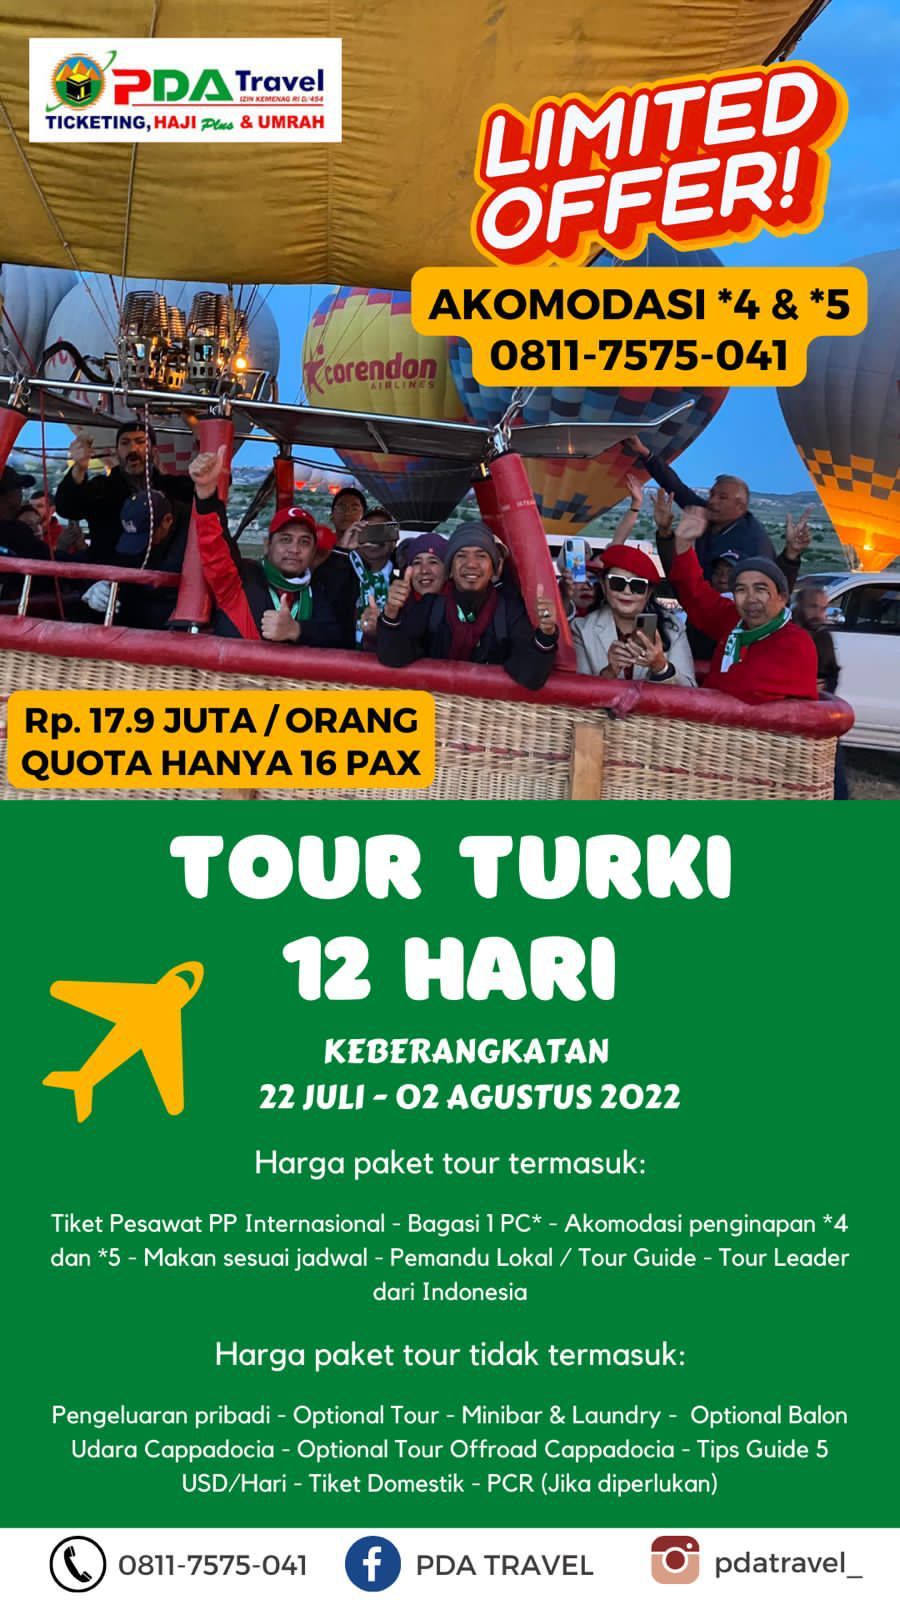 PDA Travel Promo Tour Muslim Turki 12 Hari, Fauzan: Biaya Rp17.900.000